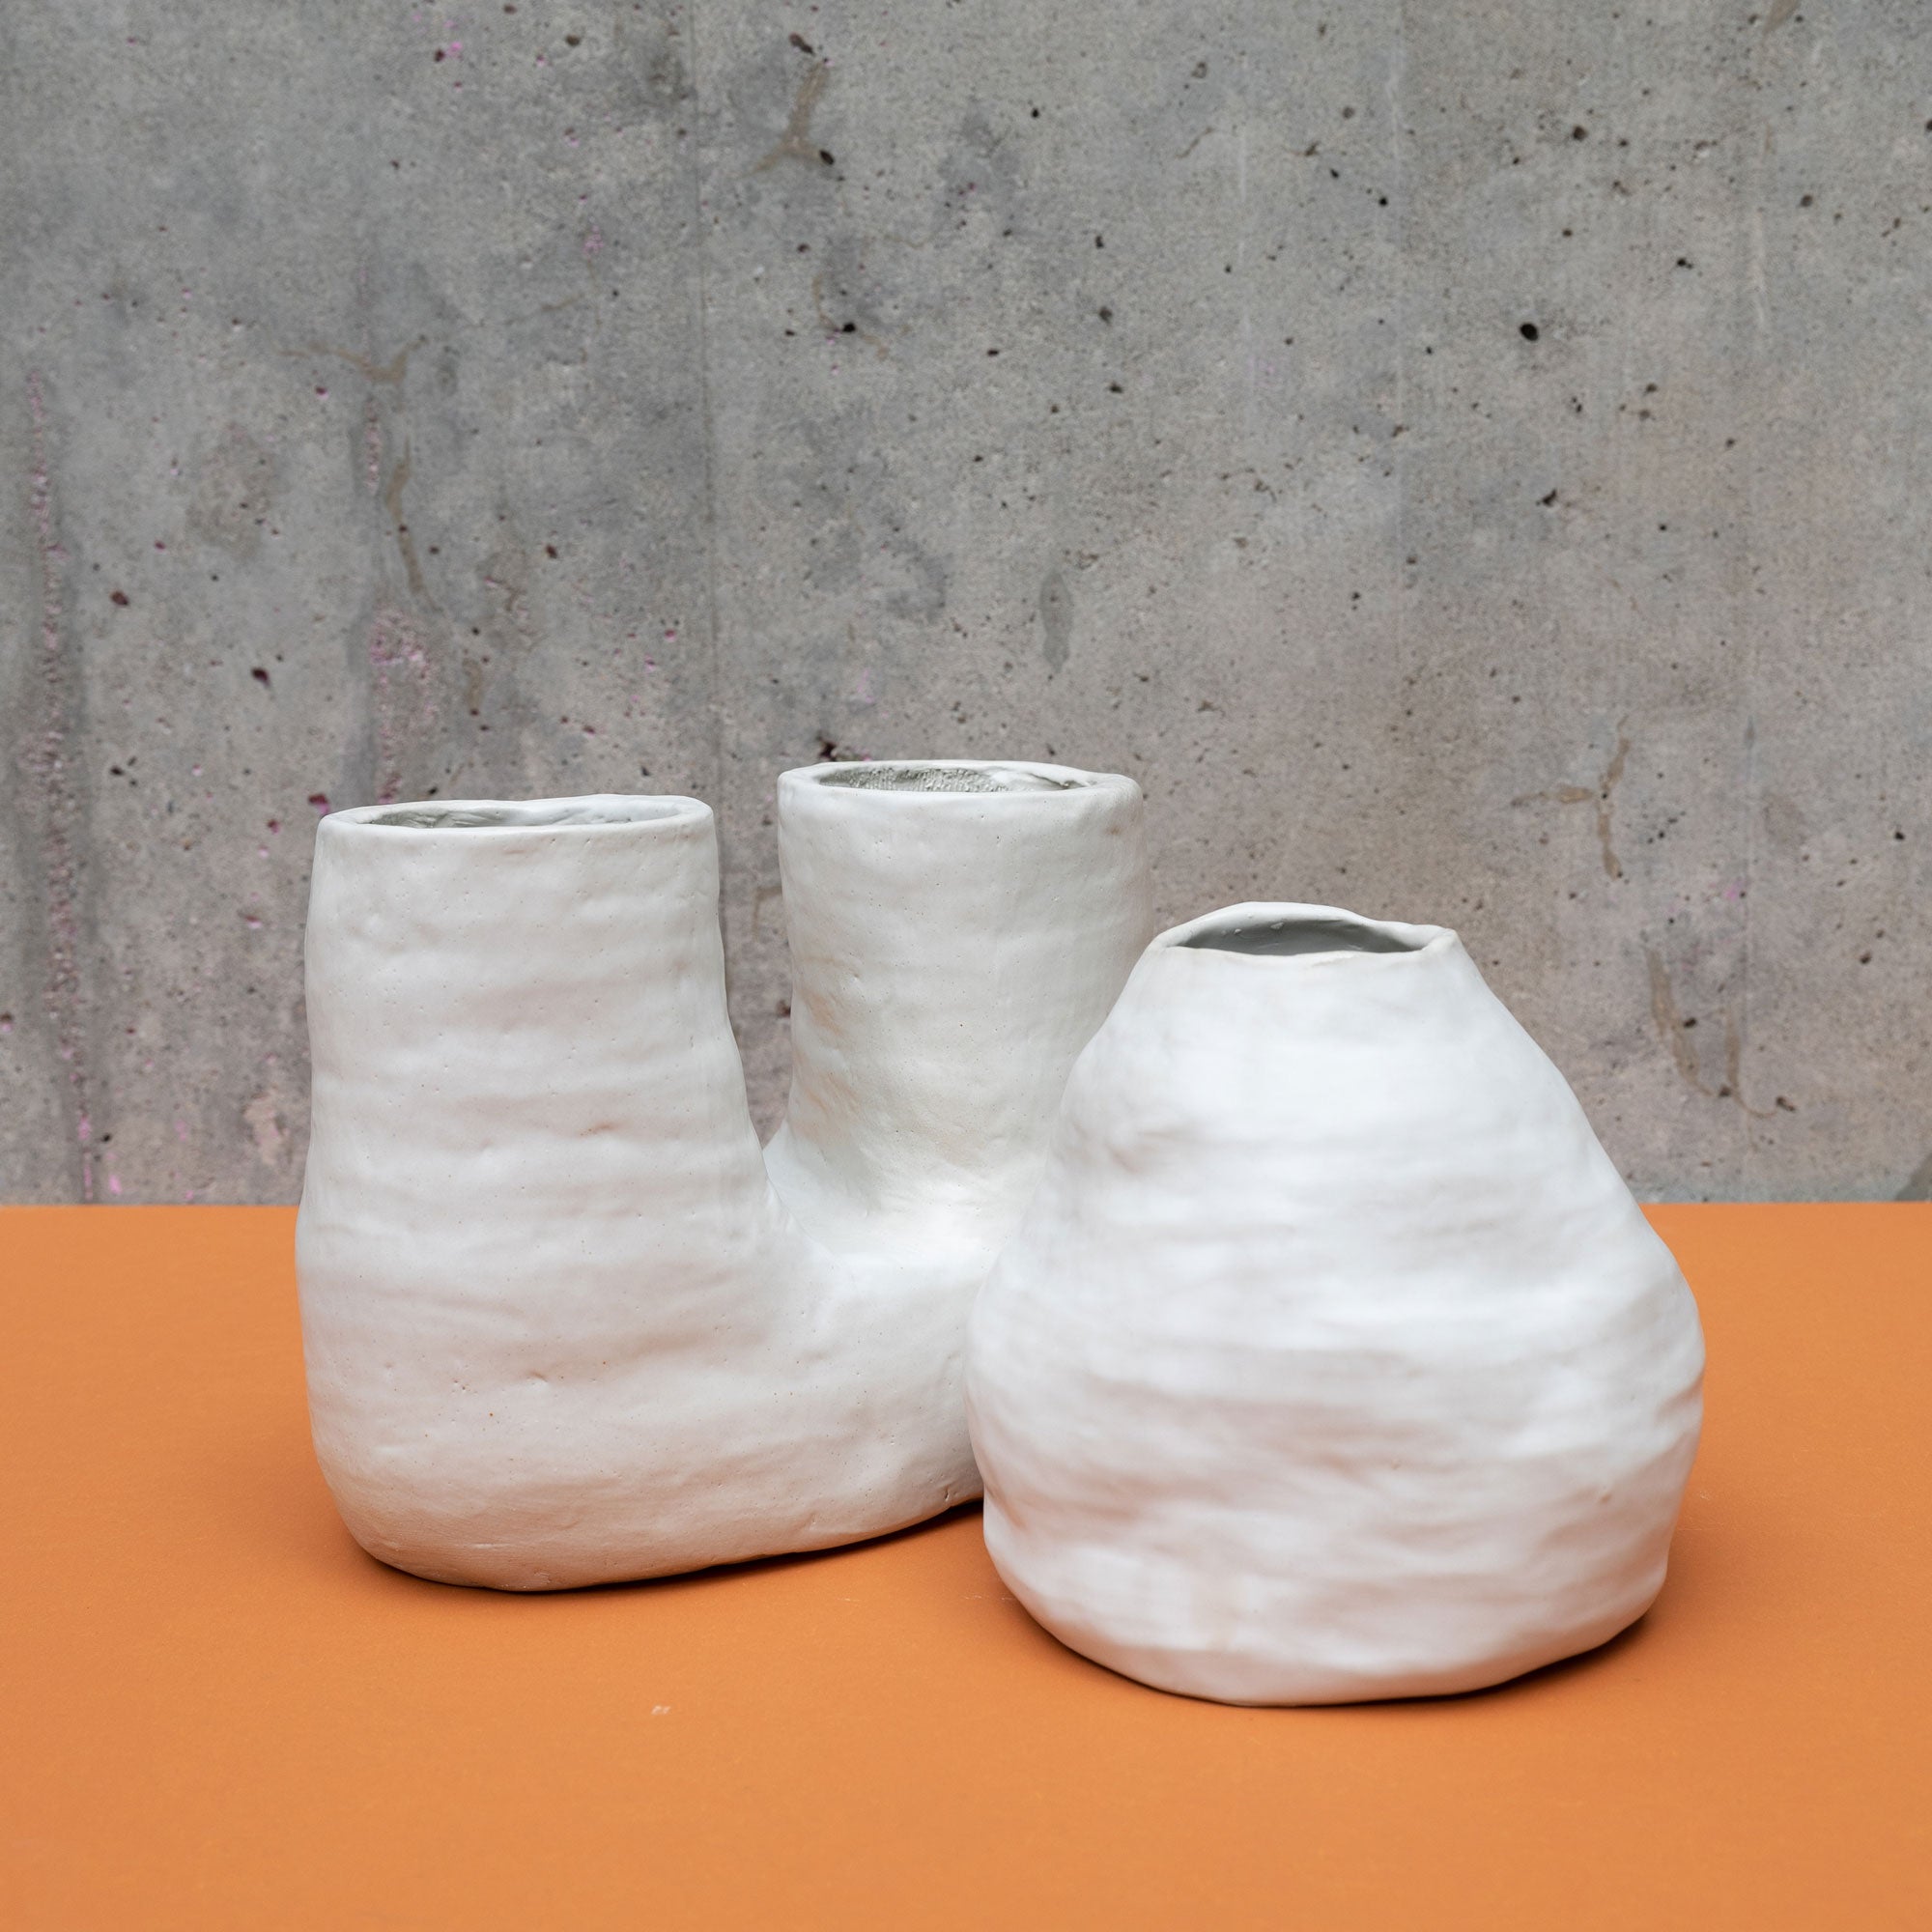 Organic Vase • Hand-Building • 1 session • Lausanne (Renens-Gare)